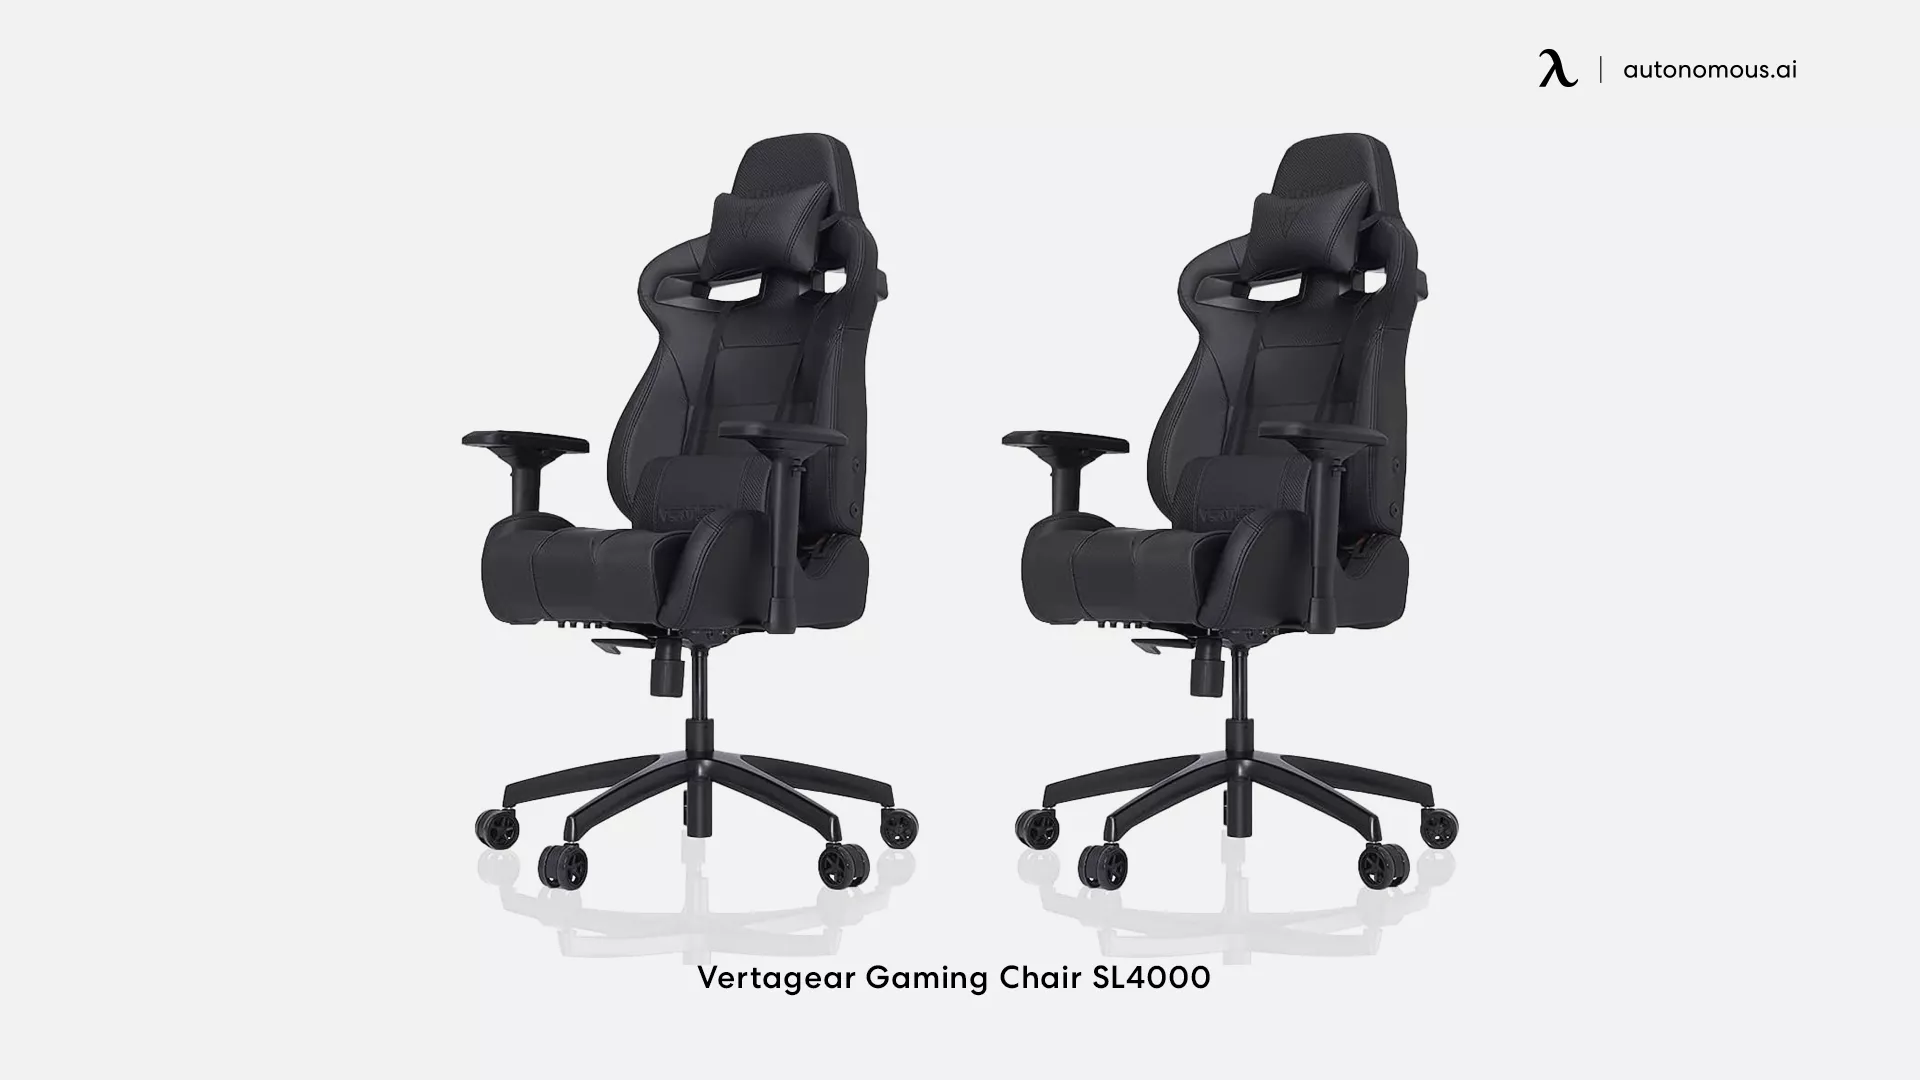 Vertagear SL4000 Gaming Chair